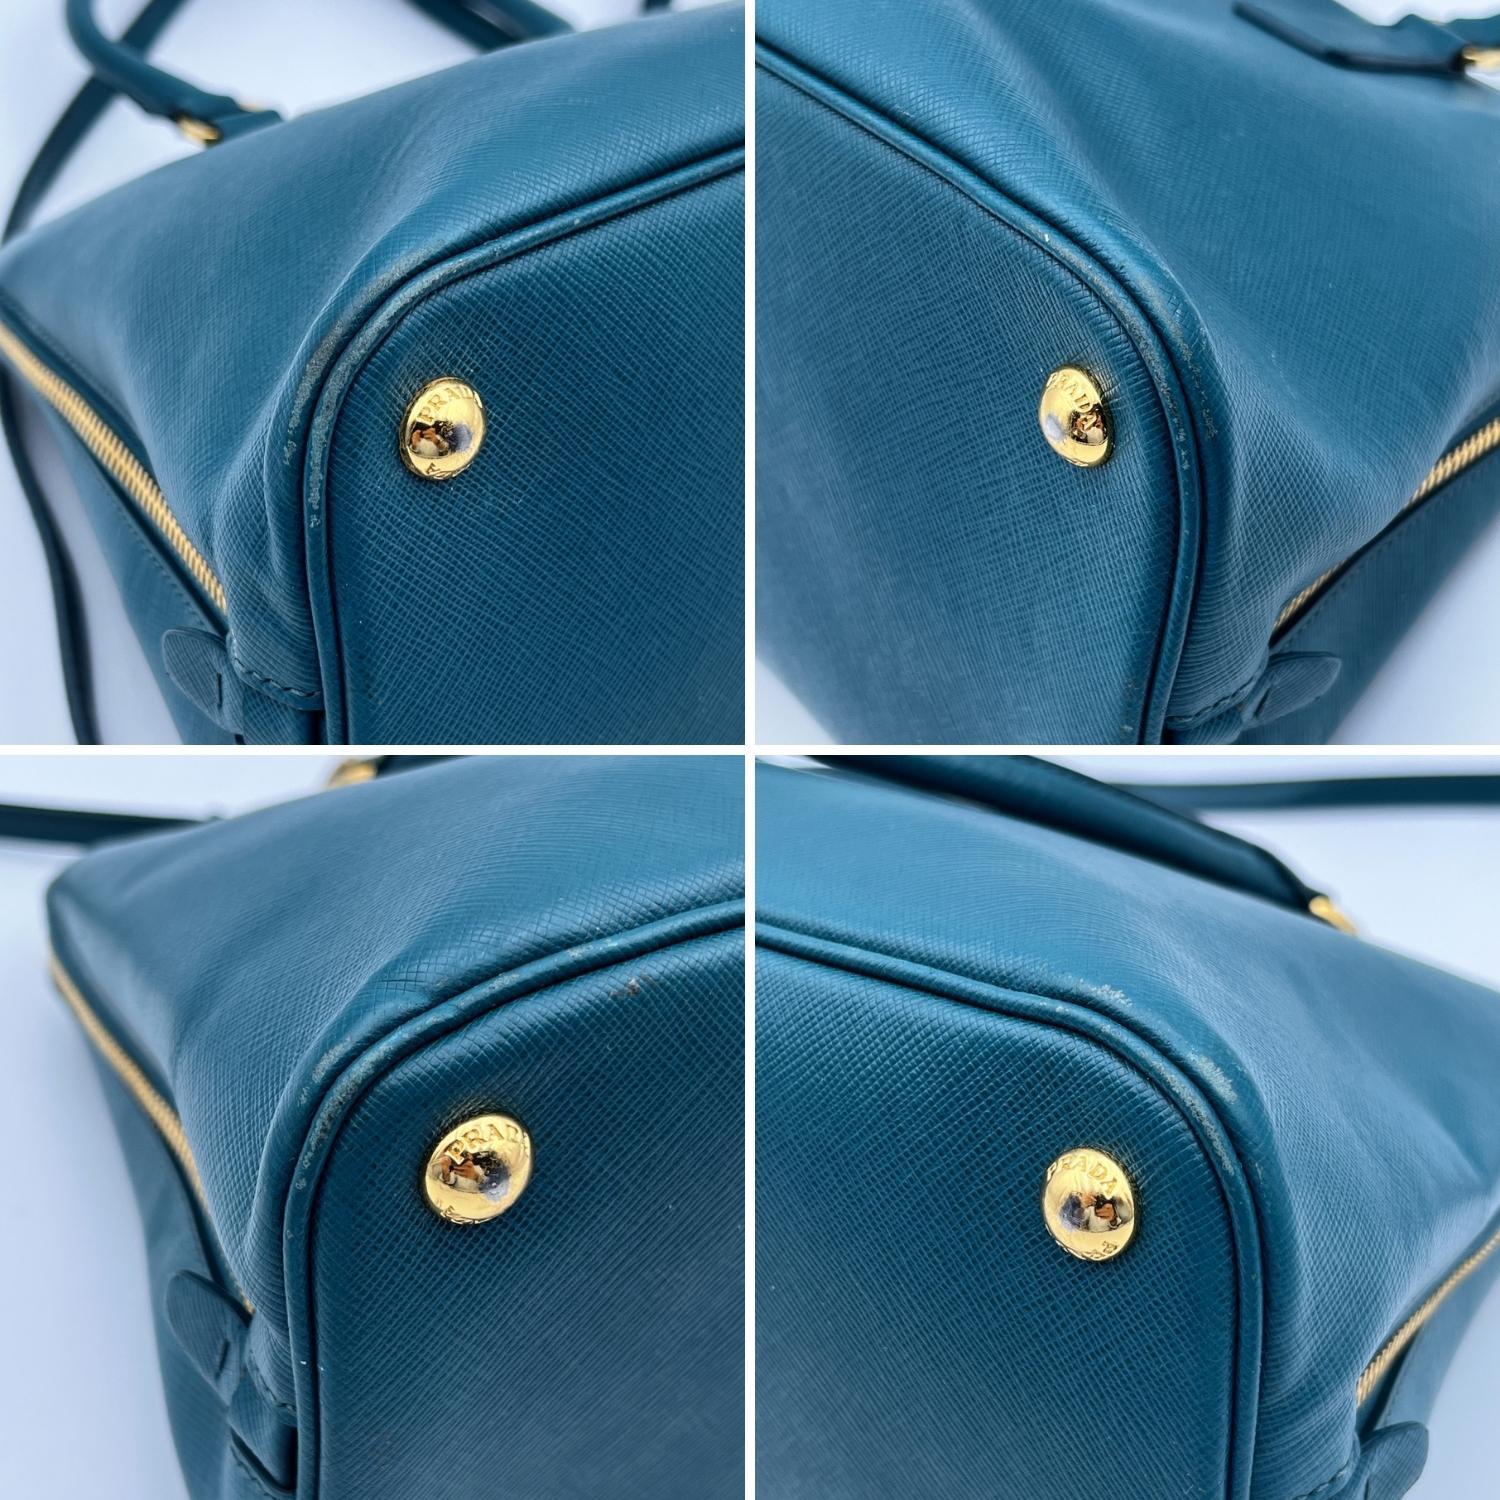 Blue Prada Teal Saffiano Leather Promenade Tote Satchel Bag Handbag